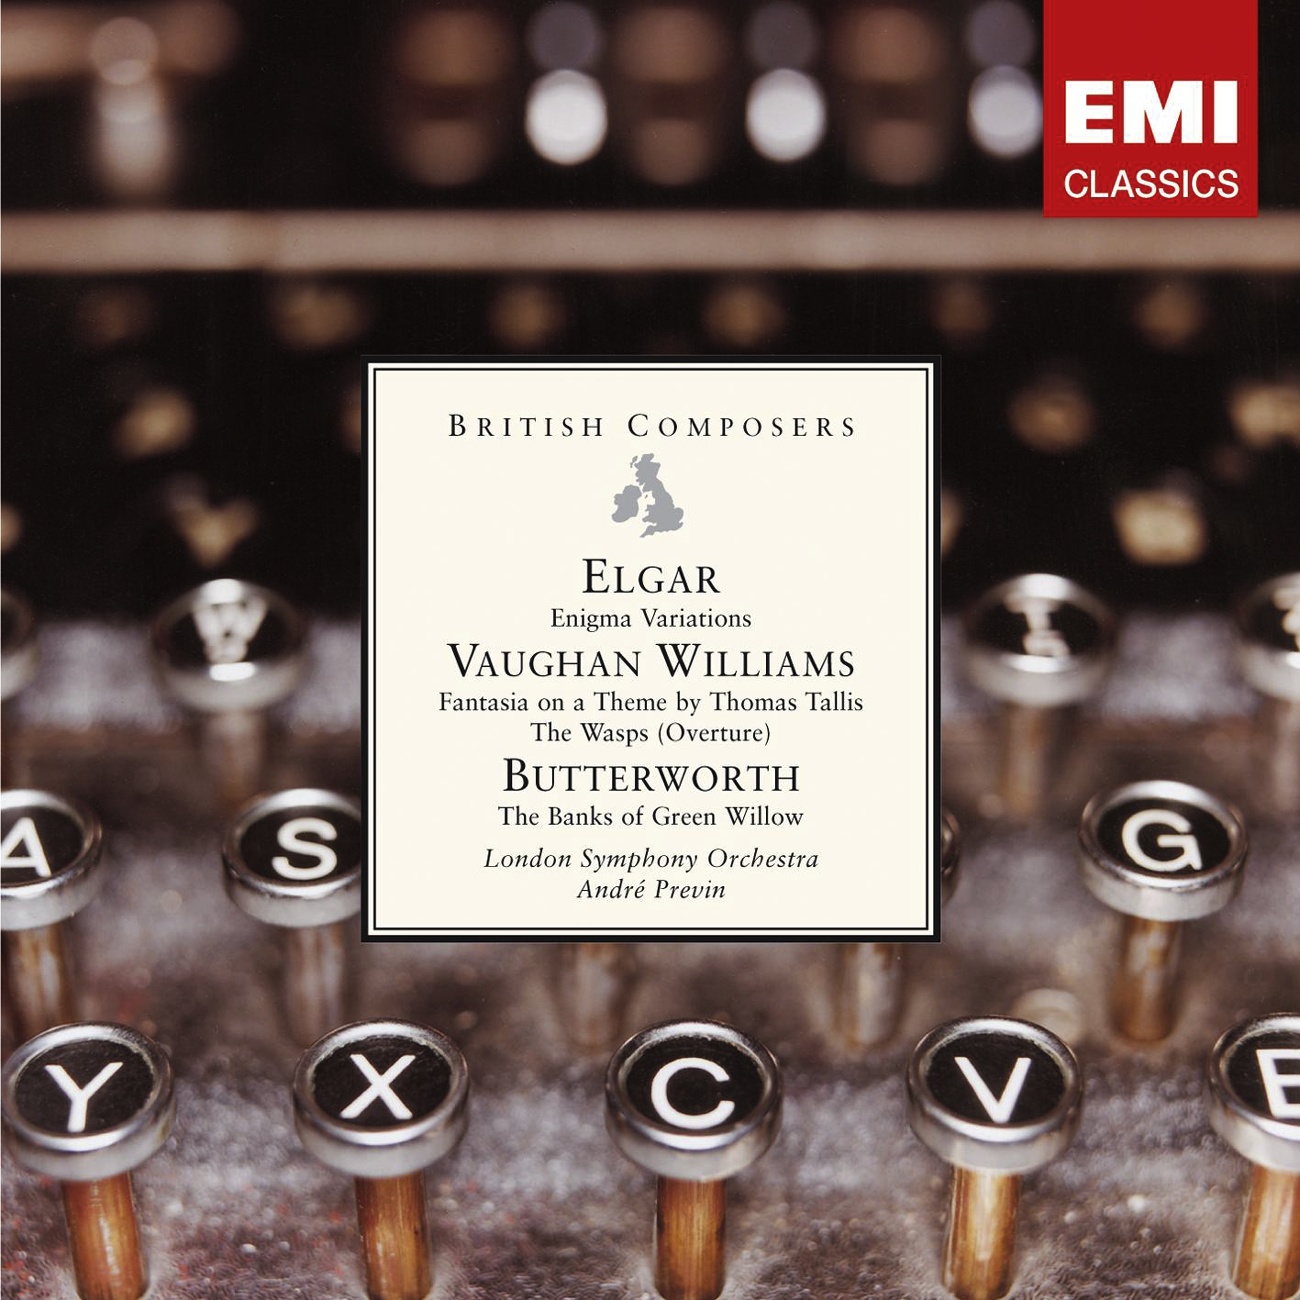 Variations on an Original Theme 'Enigma' Op. 36 (2007 Digital Remaster): IV.    W.M.B. (William Meath Baker) (Allegro di molto)